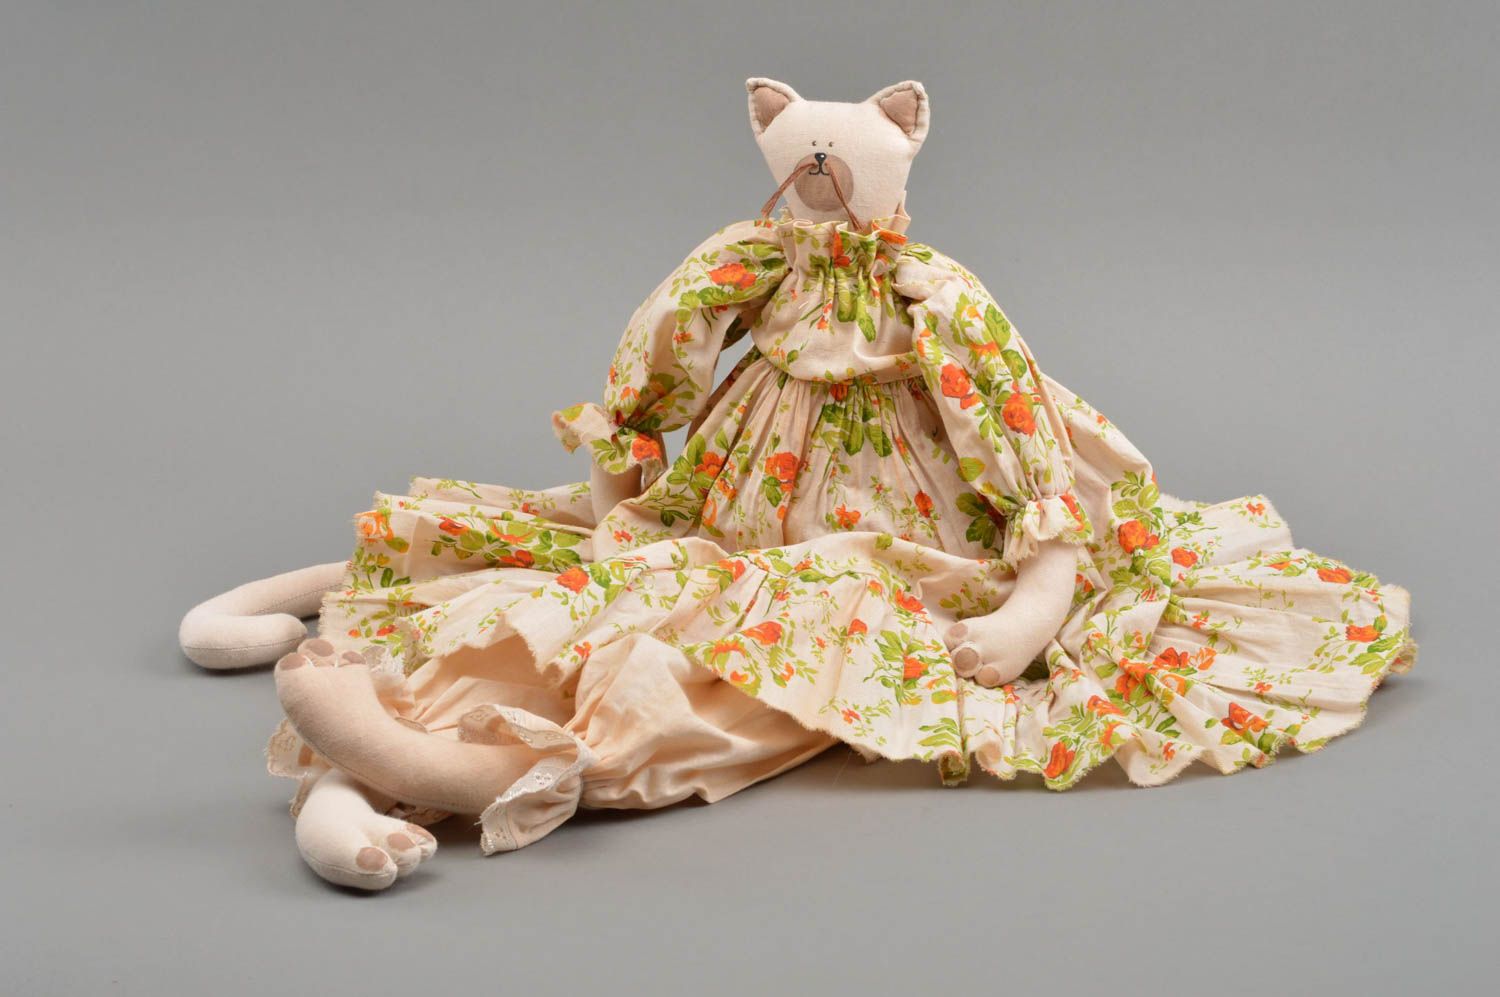 Fabric toy cat in dress handmade stuffed toy for interior decor nursery ideas photo 3